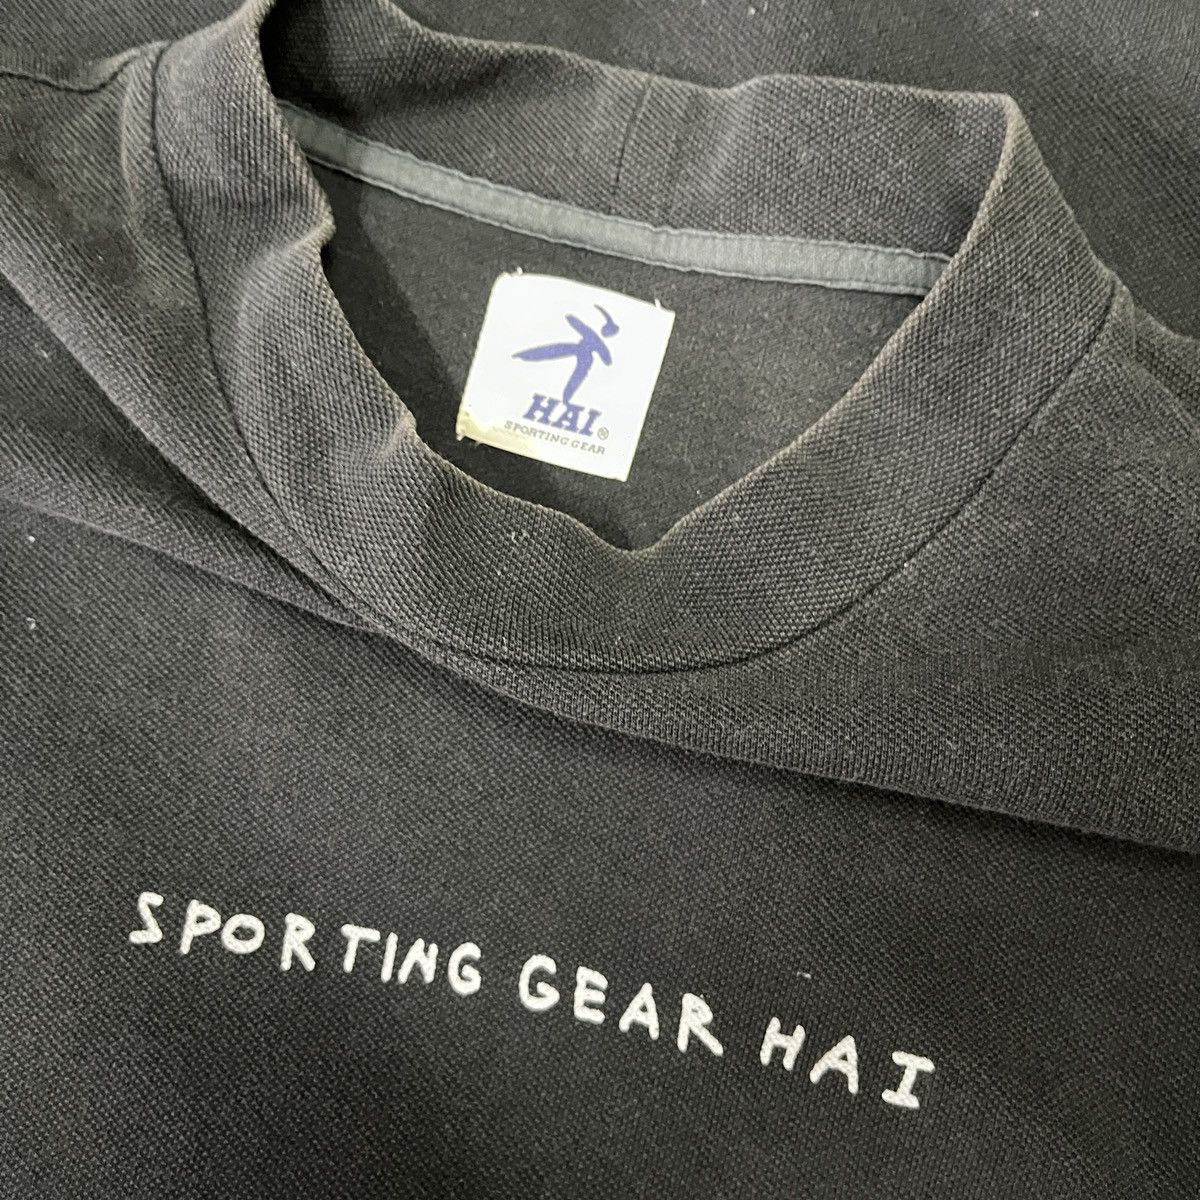 Vintage Hai Sporting Gear Lacoste Cotton TShirt - 14